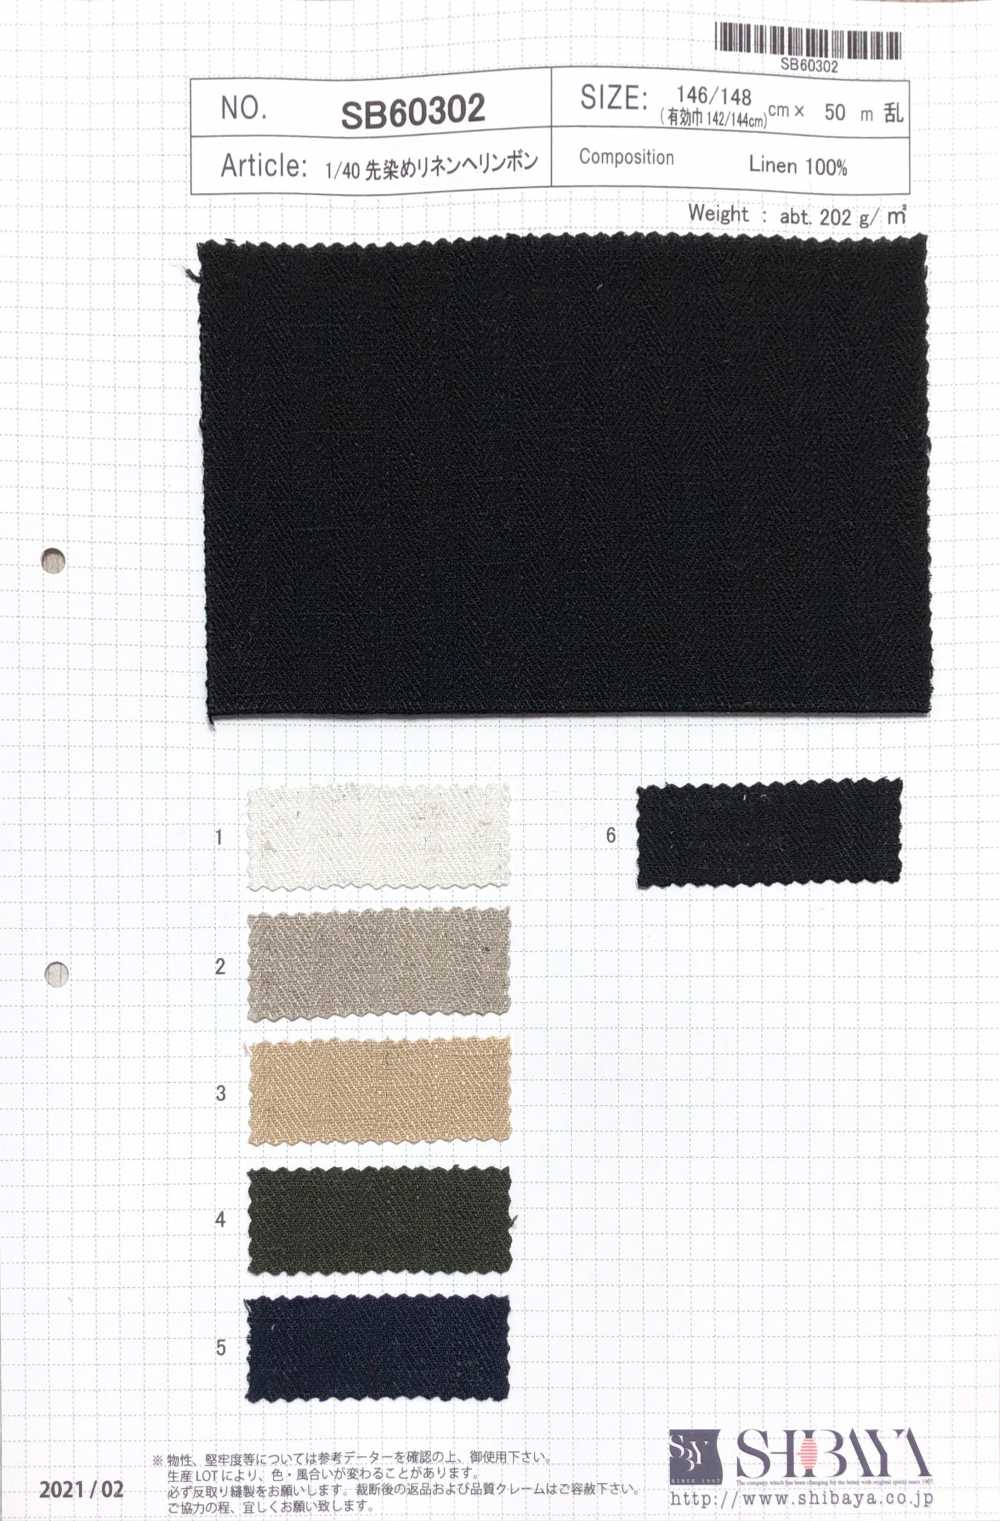 SB60302 1/40 Yarn Dyed Linen Herringbone[Textile / Fabric] SHIBAYA